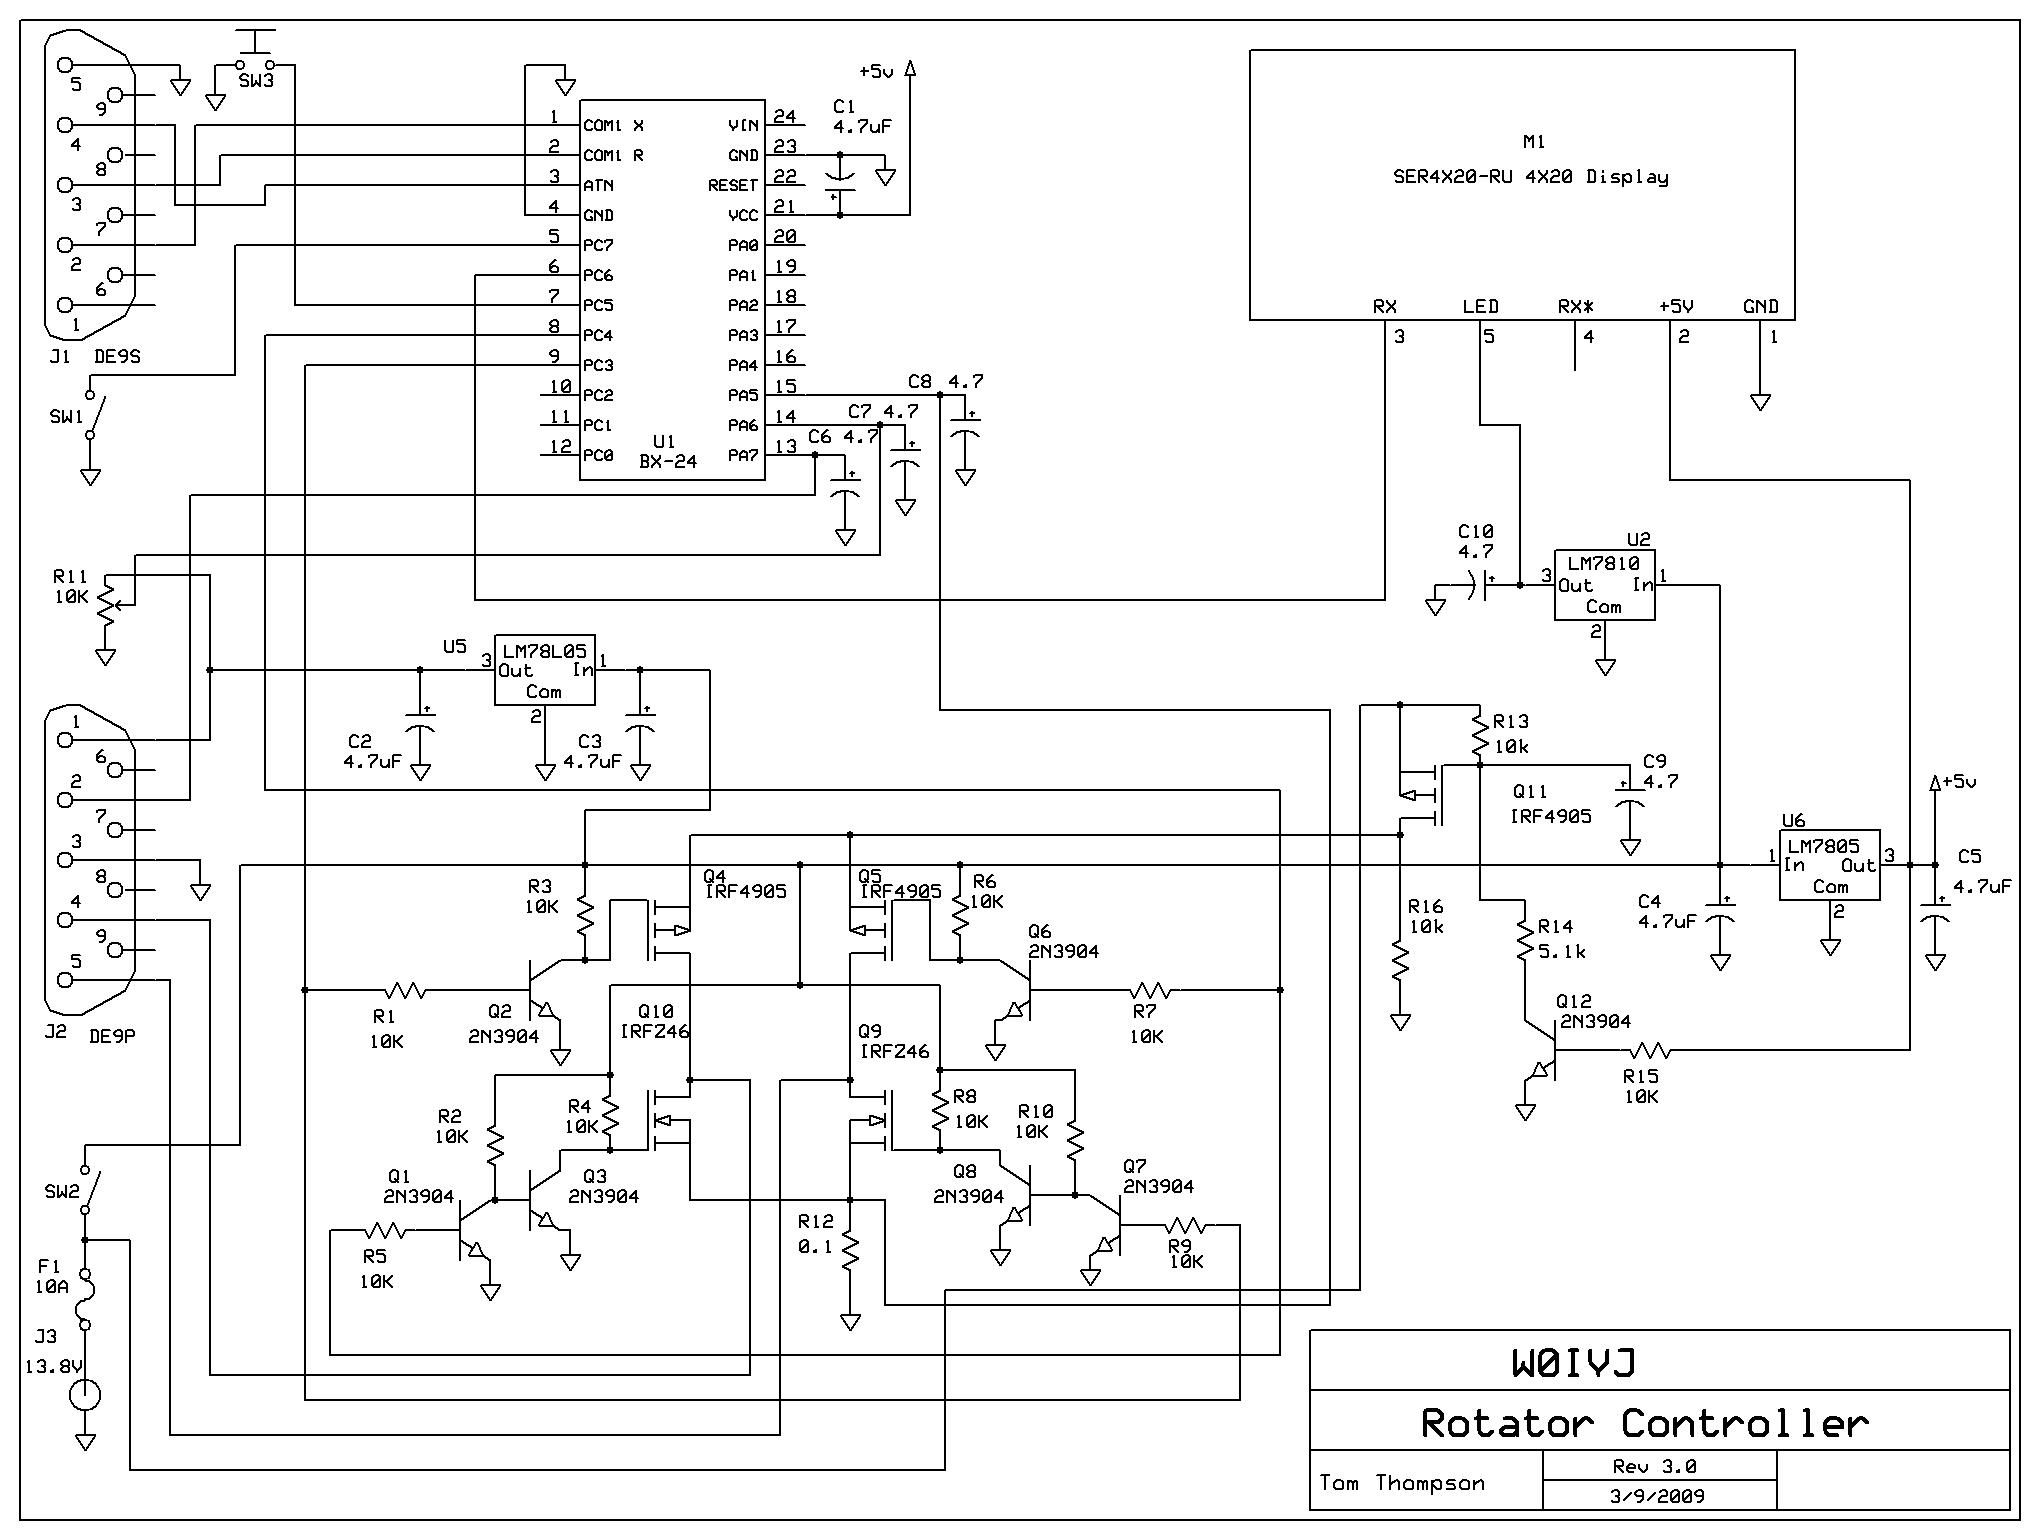 cdr rotor control wiring diagram - Wiring Diagram